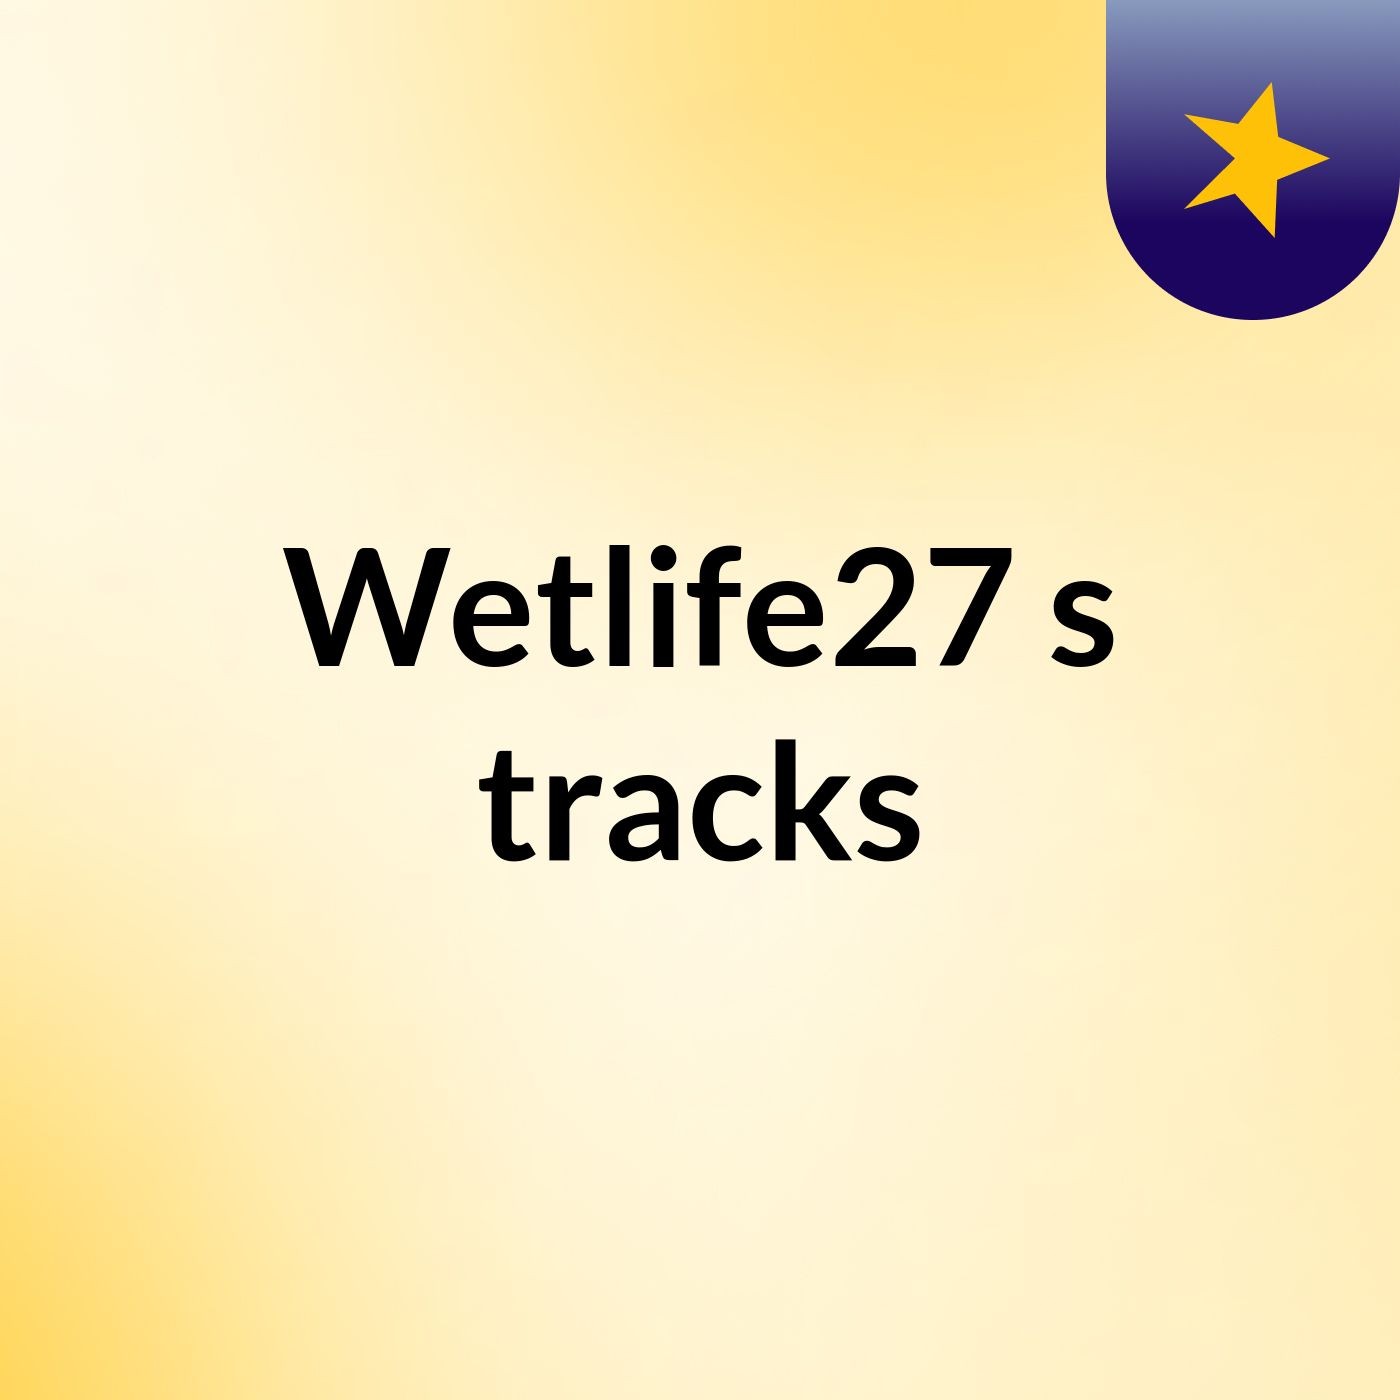 Wetlife27's tracks